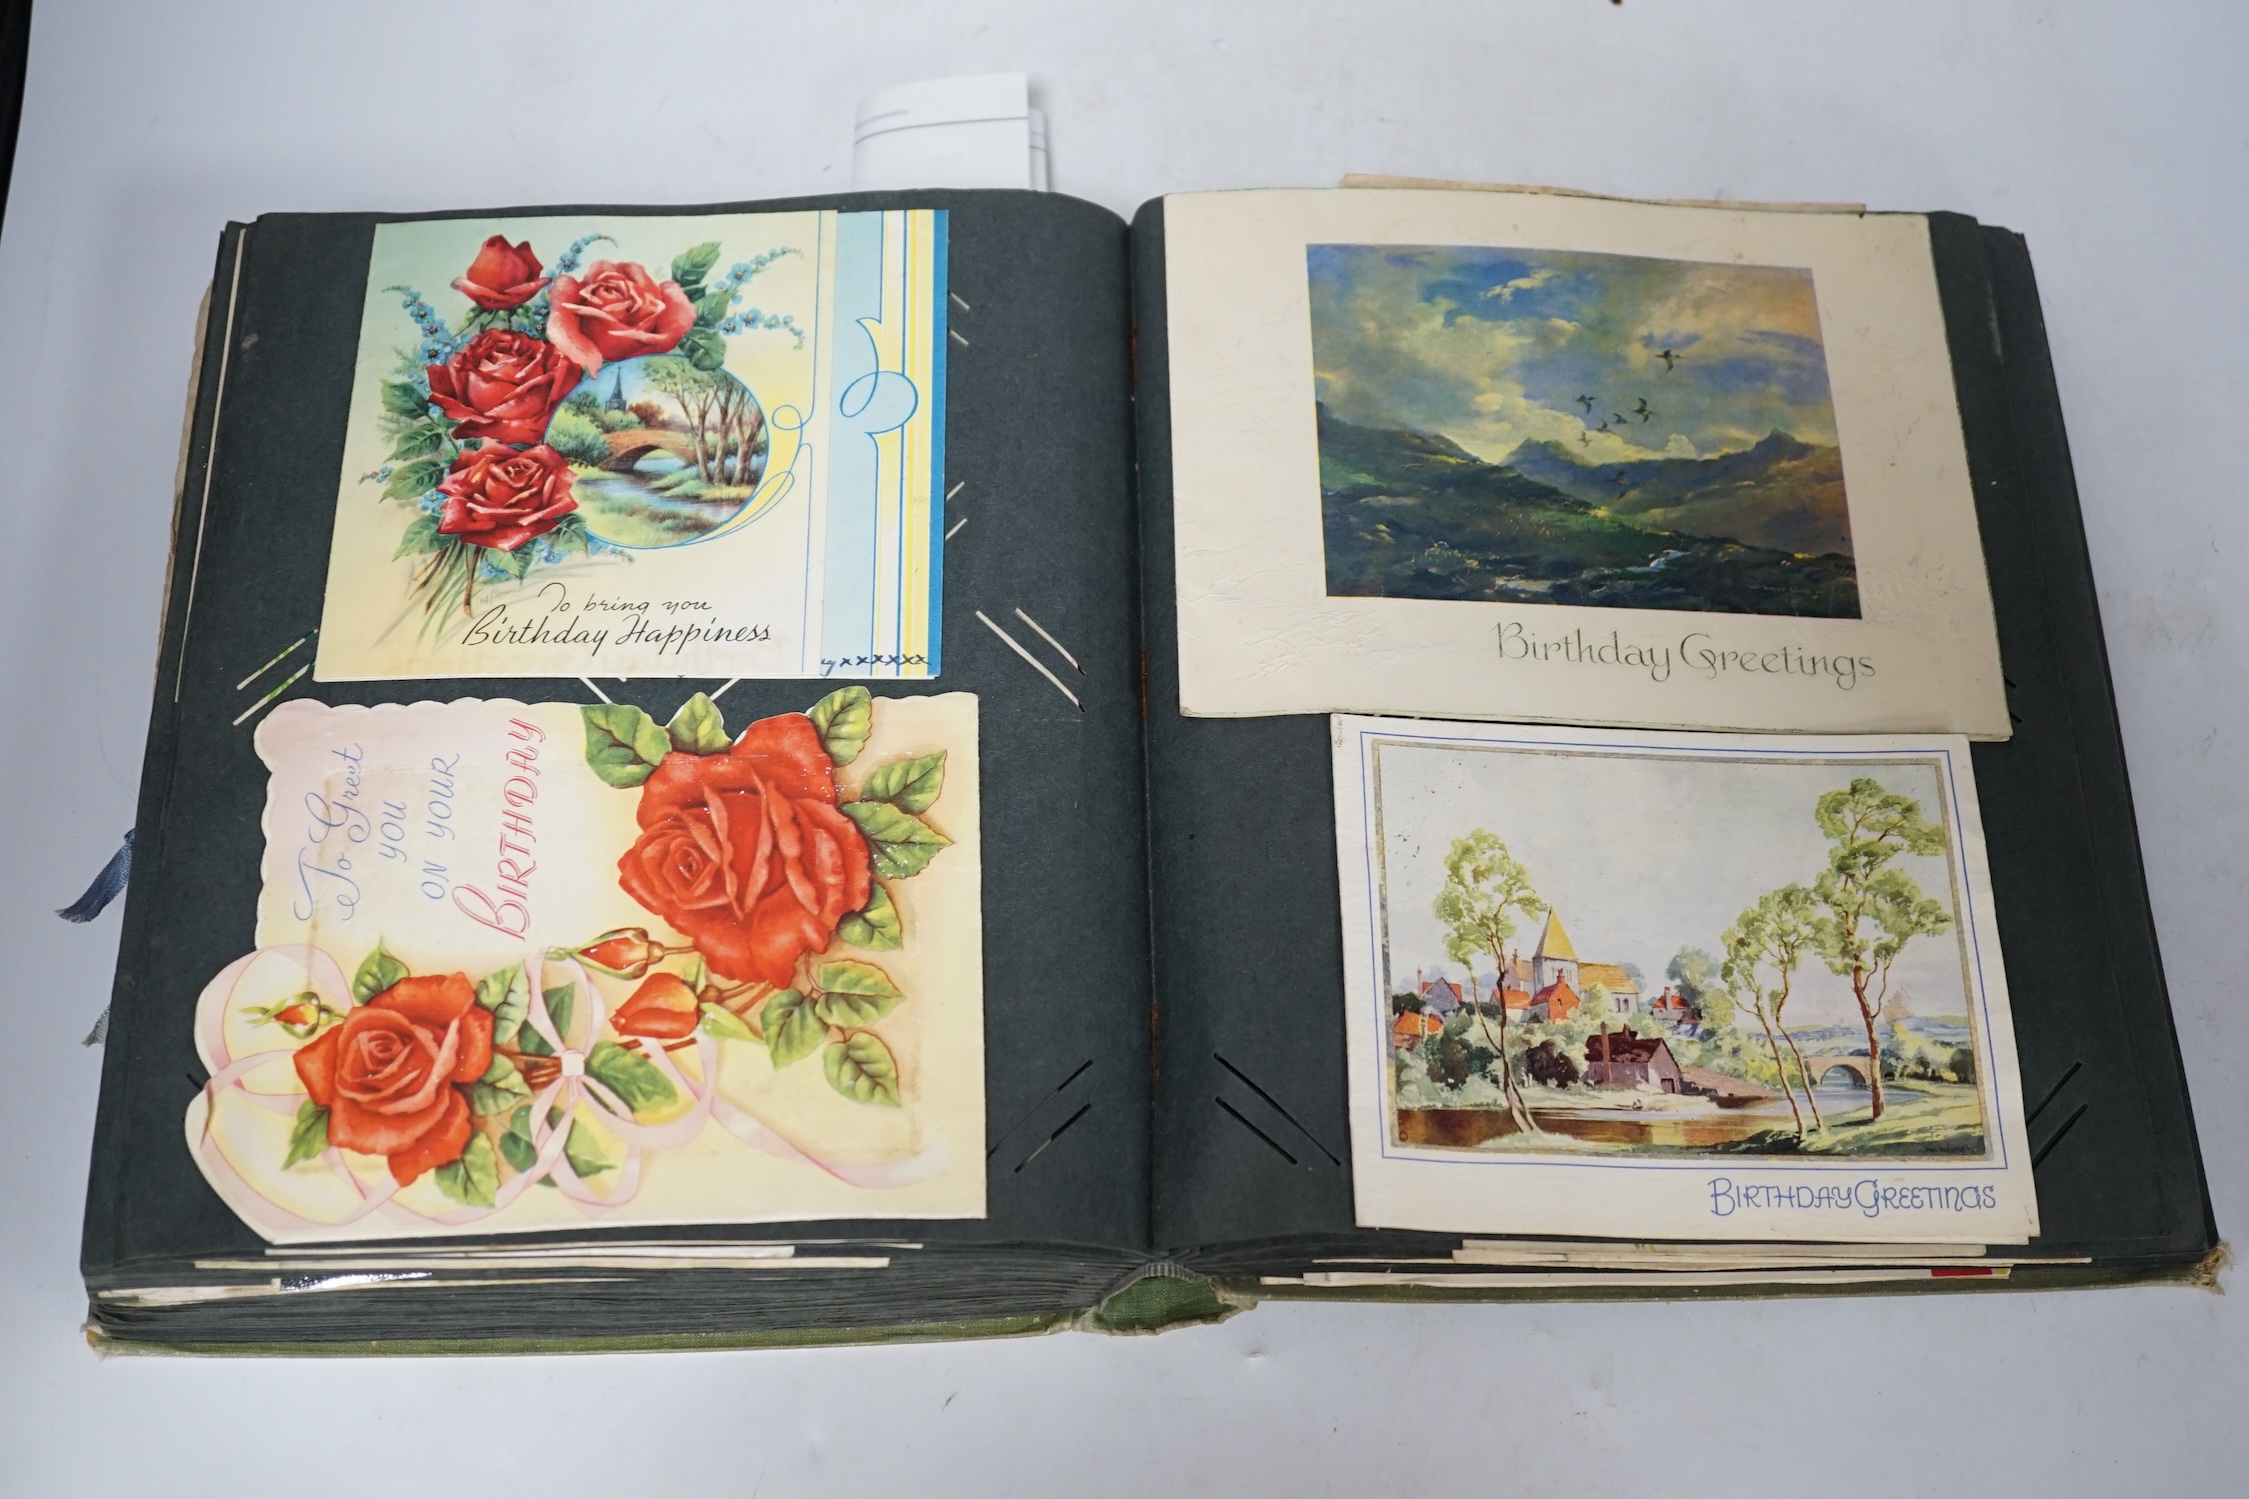 A vintage postcard album including greetings cards. Condition - fair